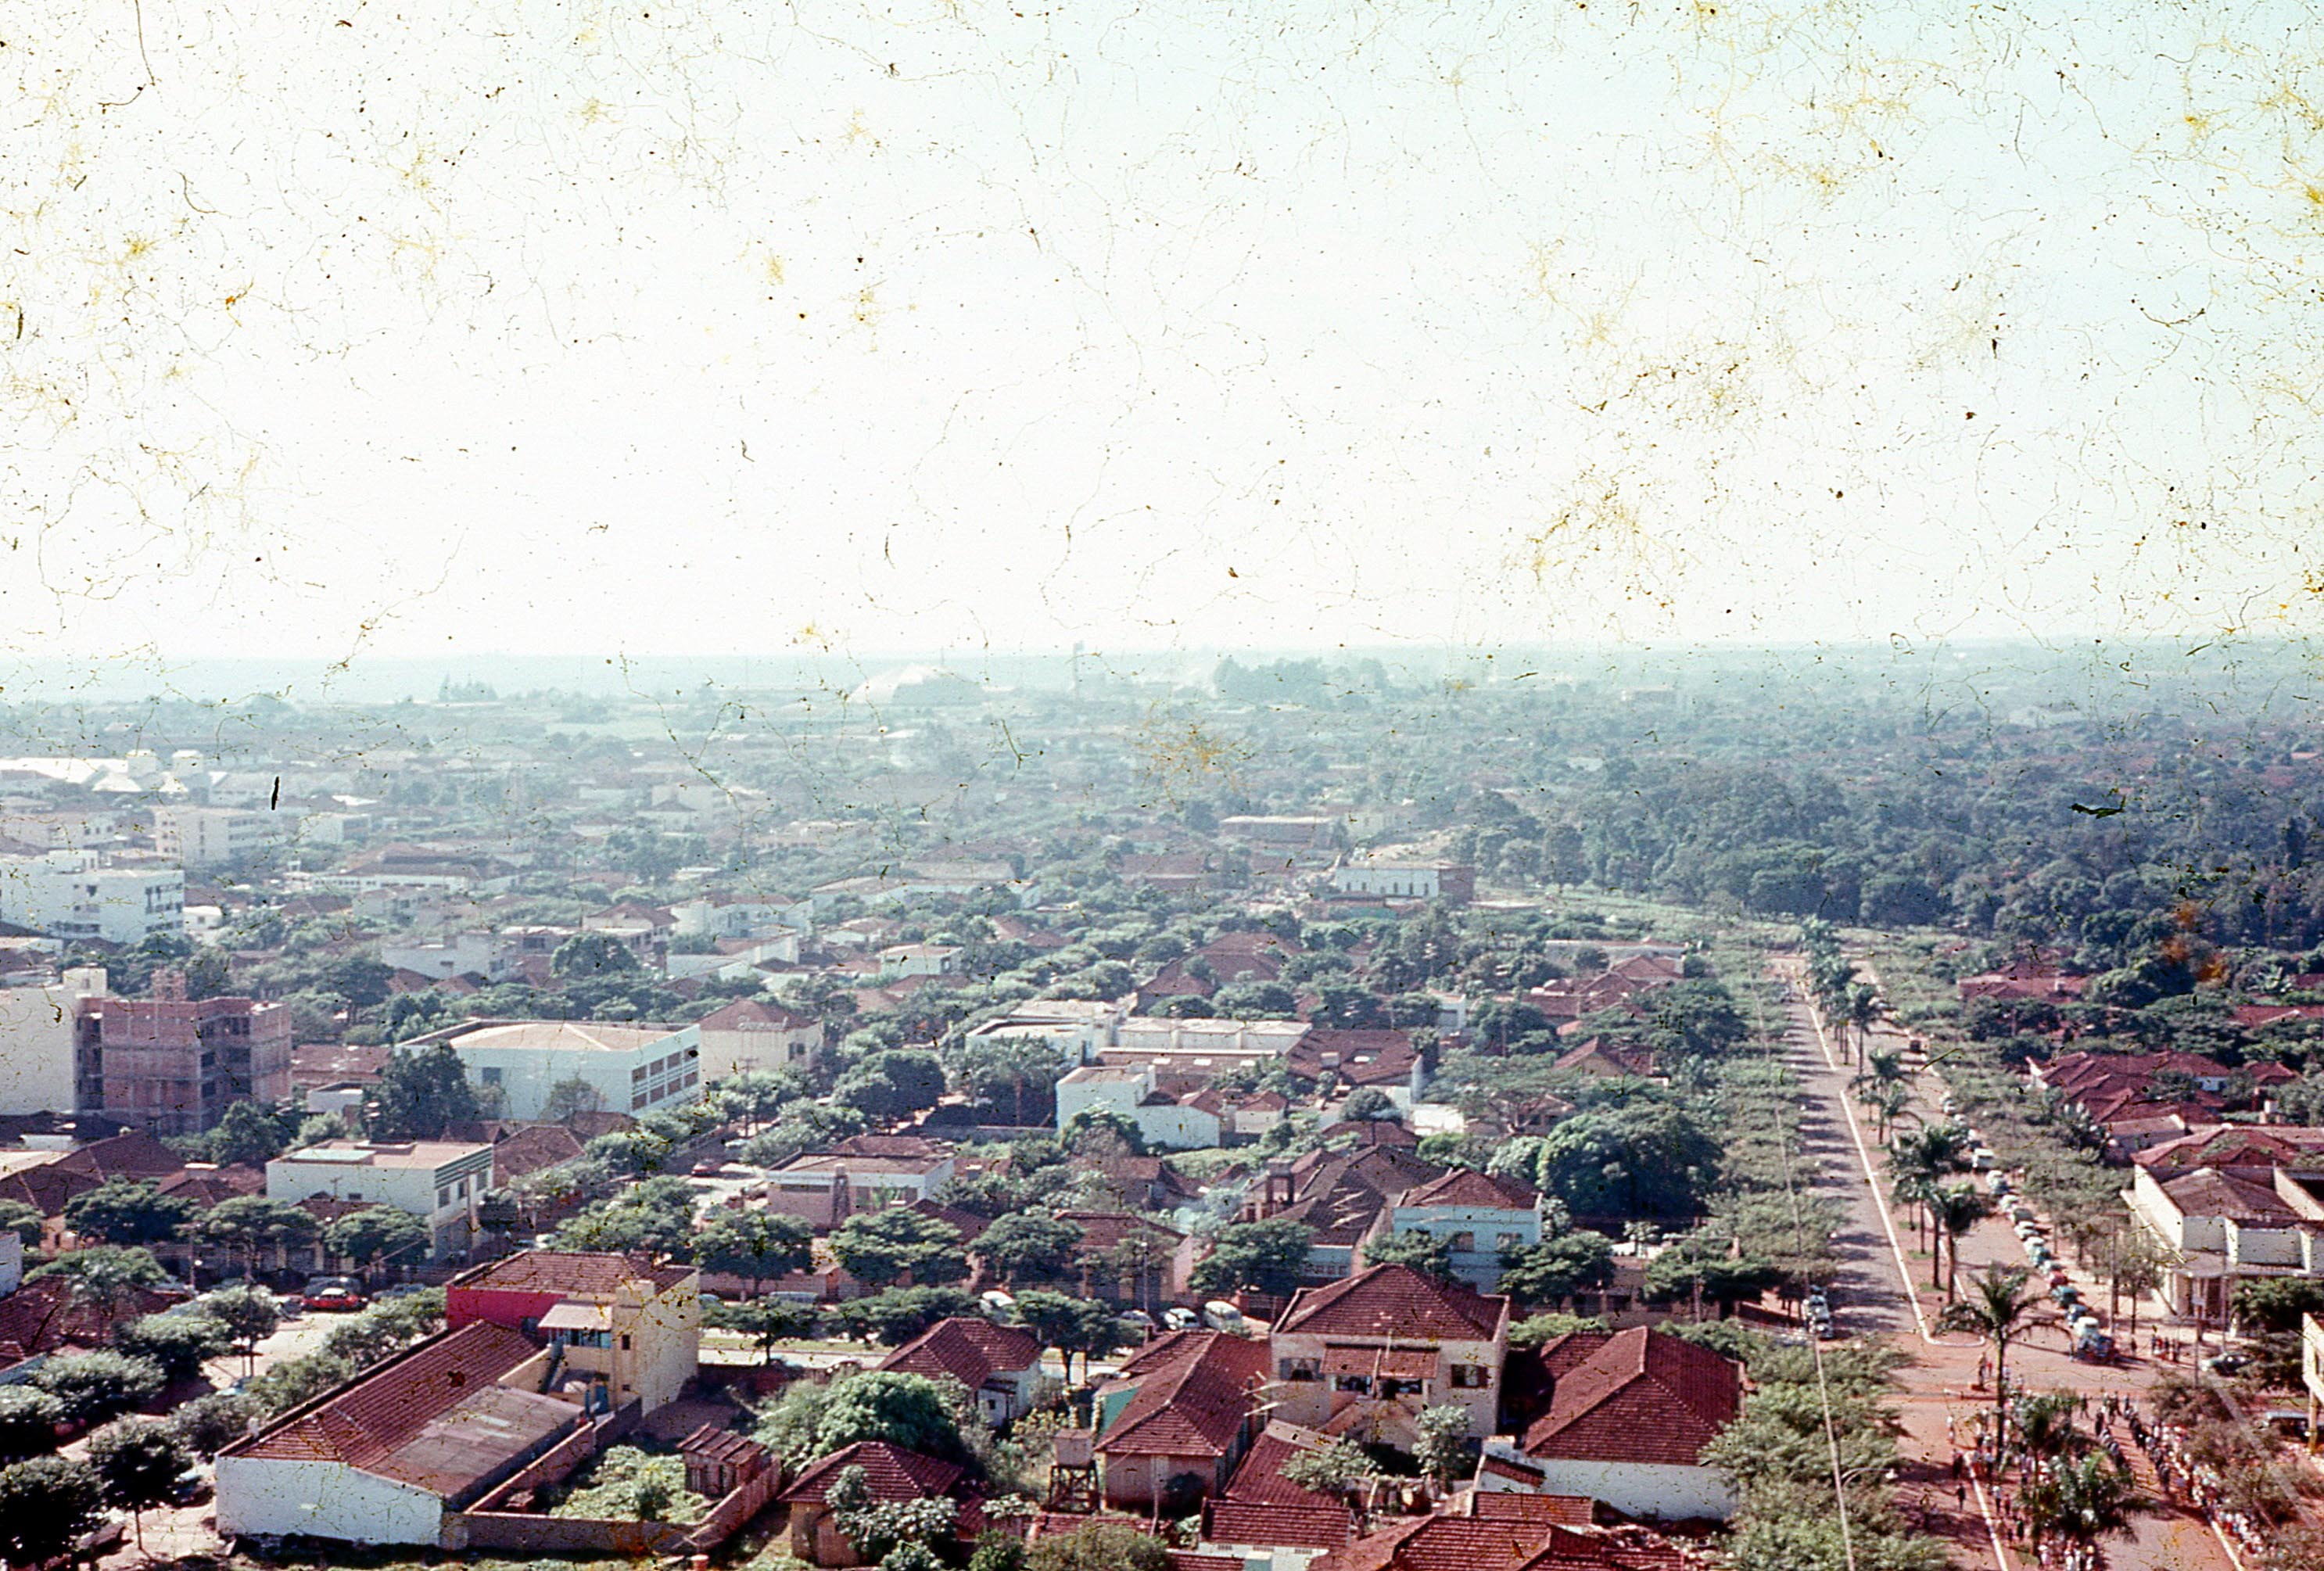 Centro de Maringá - Início dos anos 1970